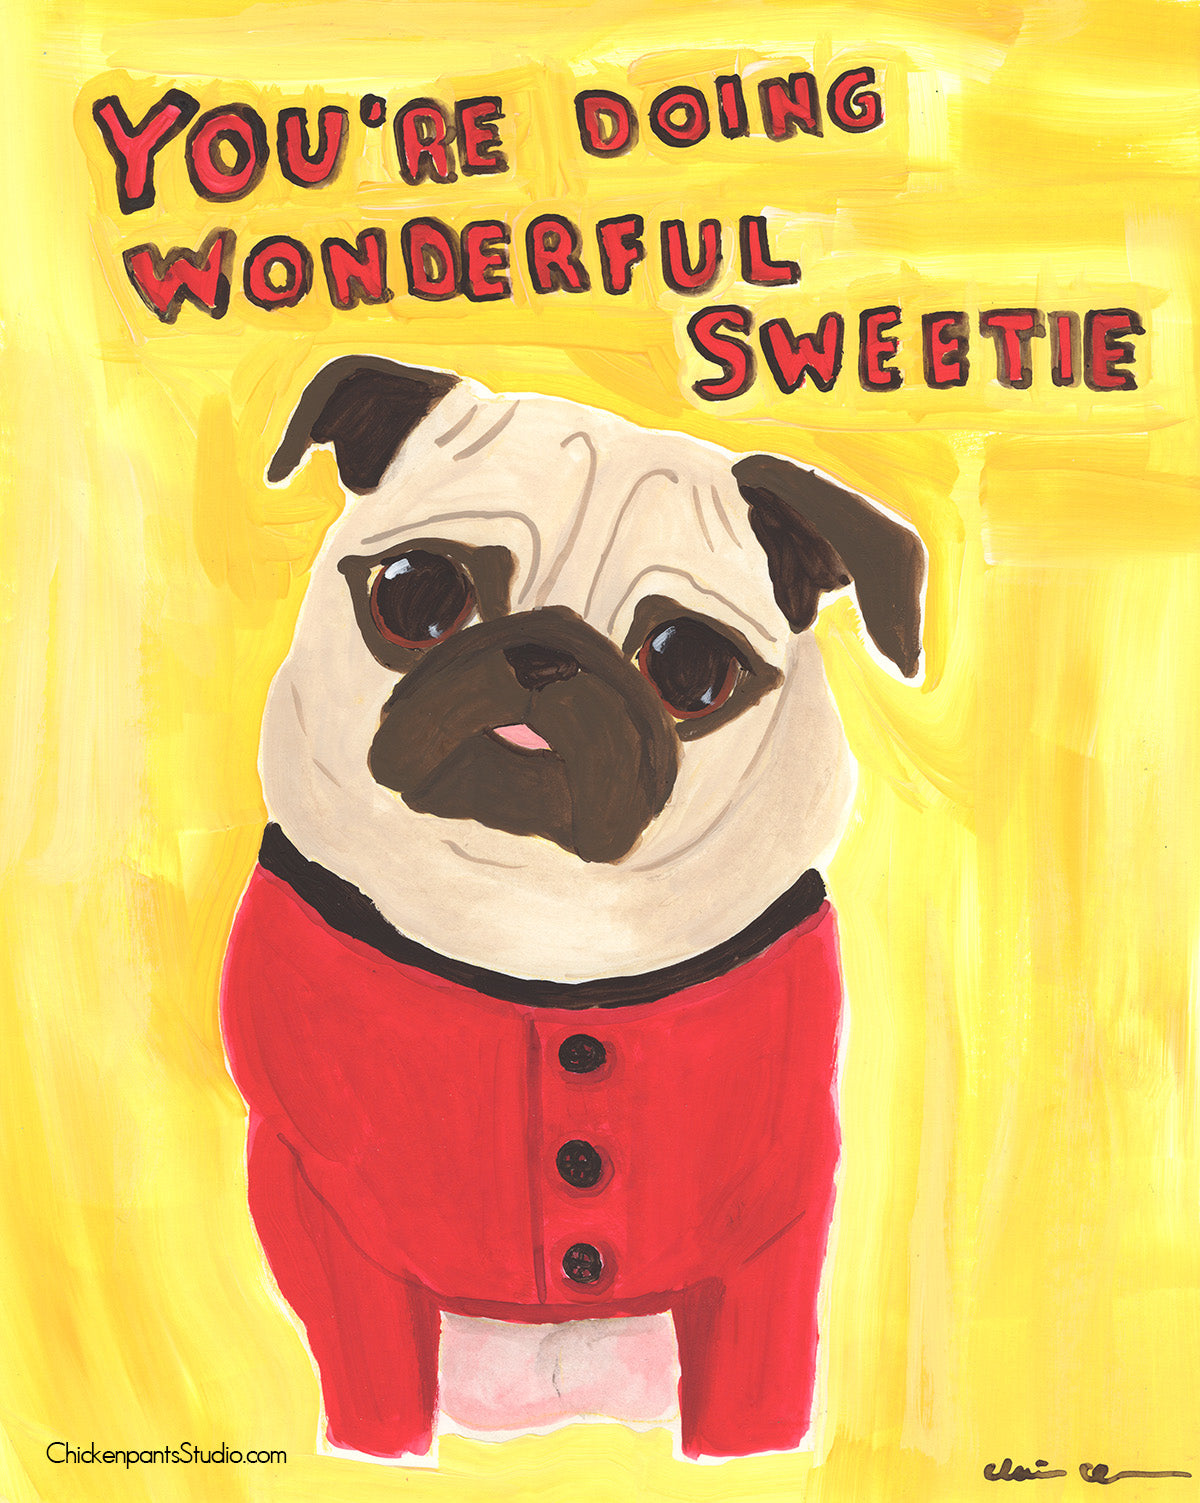 You're Doing Wonderful, Sweetie - Original Pug Painting